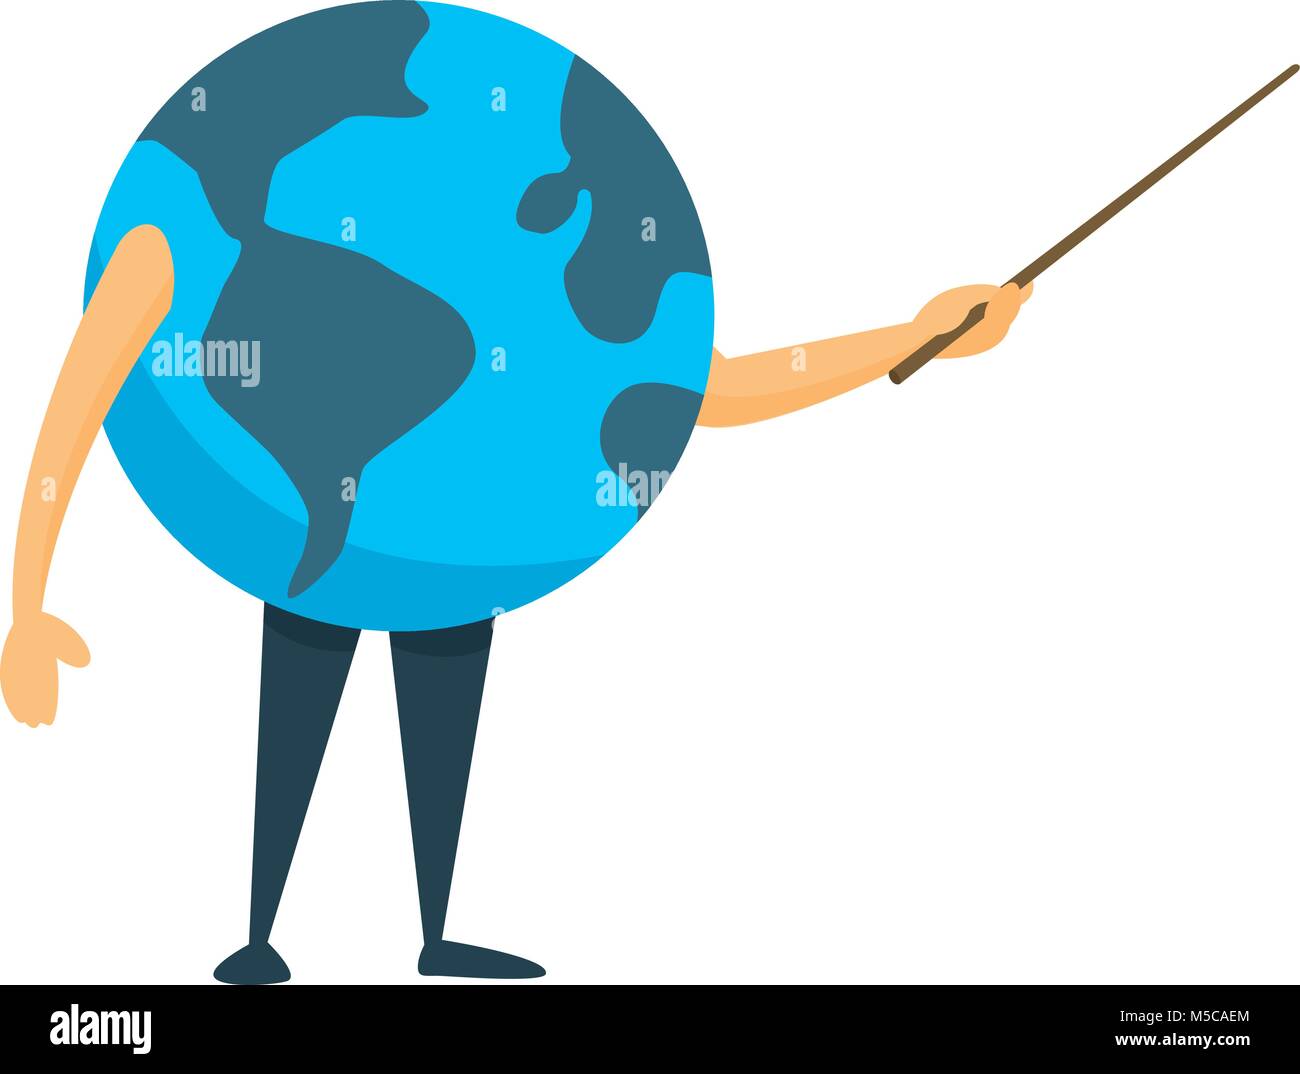 Cartoon illustration of planet earth portfolio teaching or performing a presentation Stock Vector